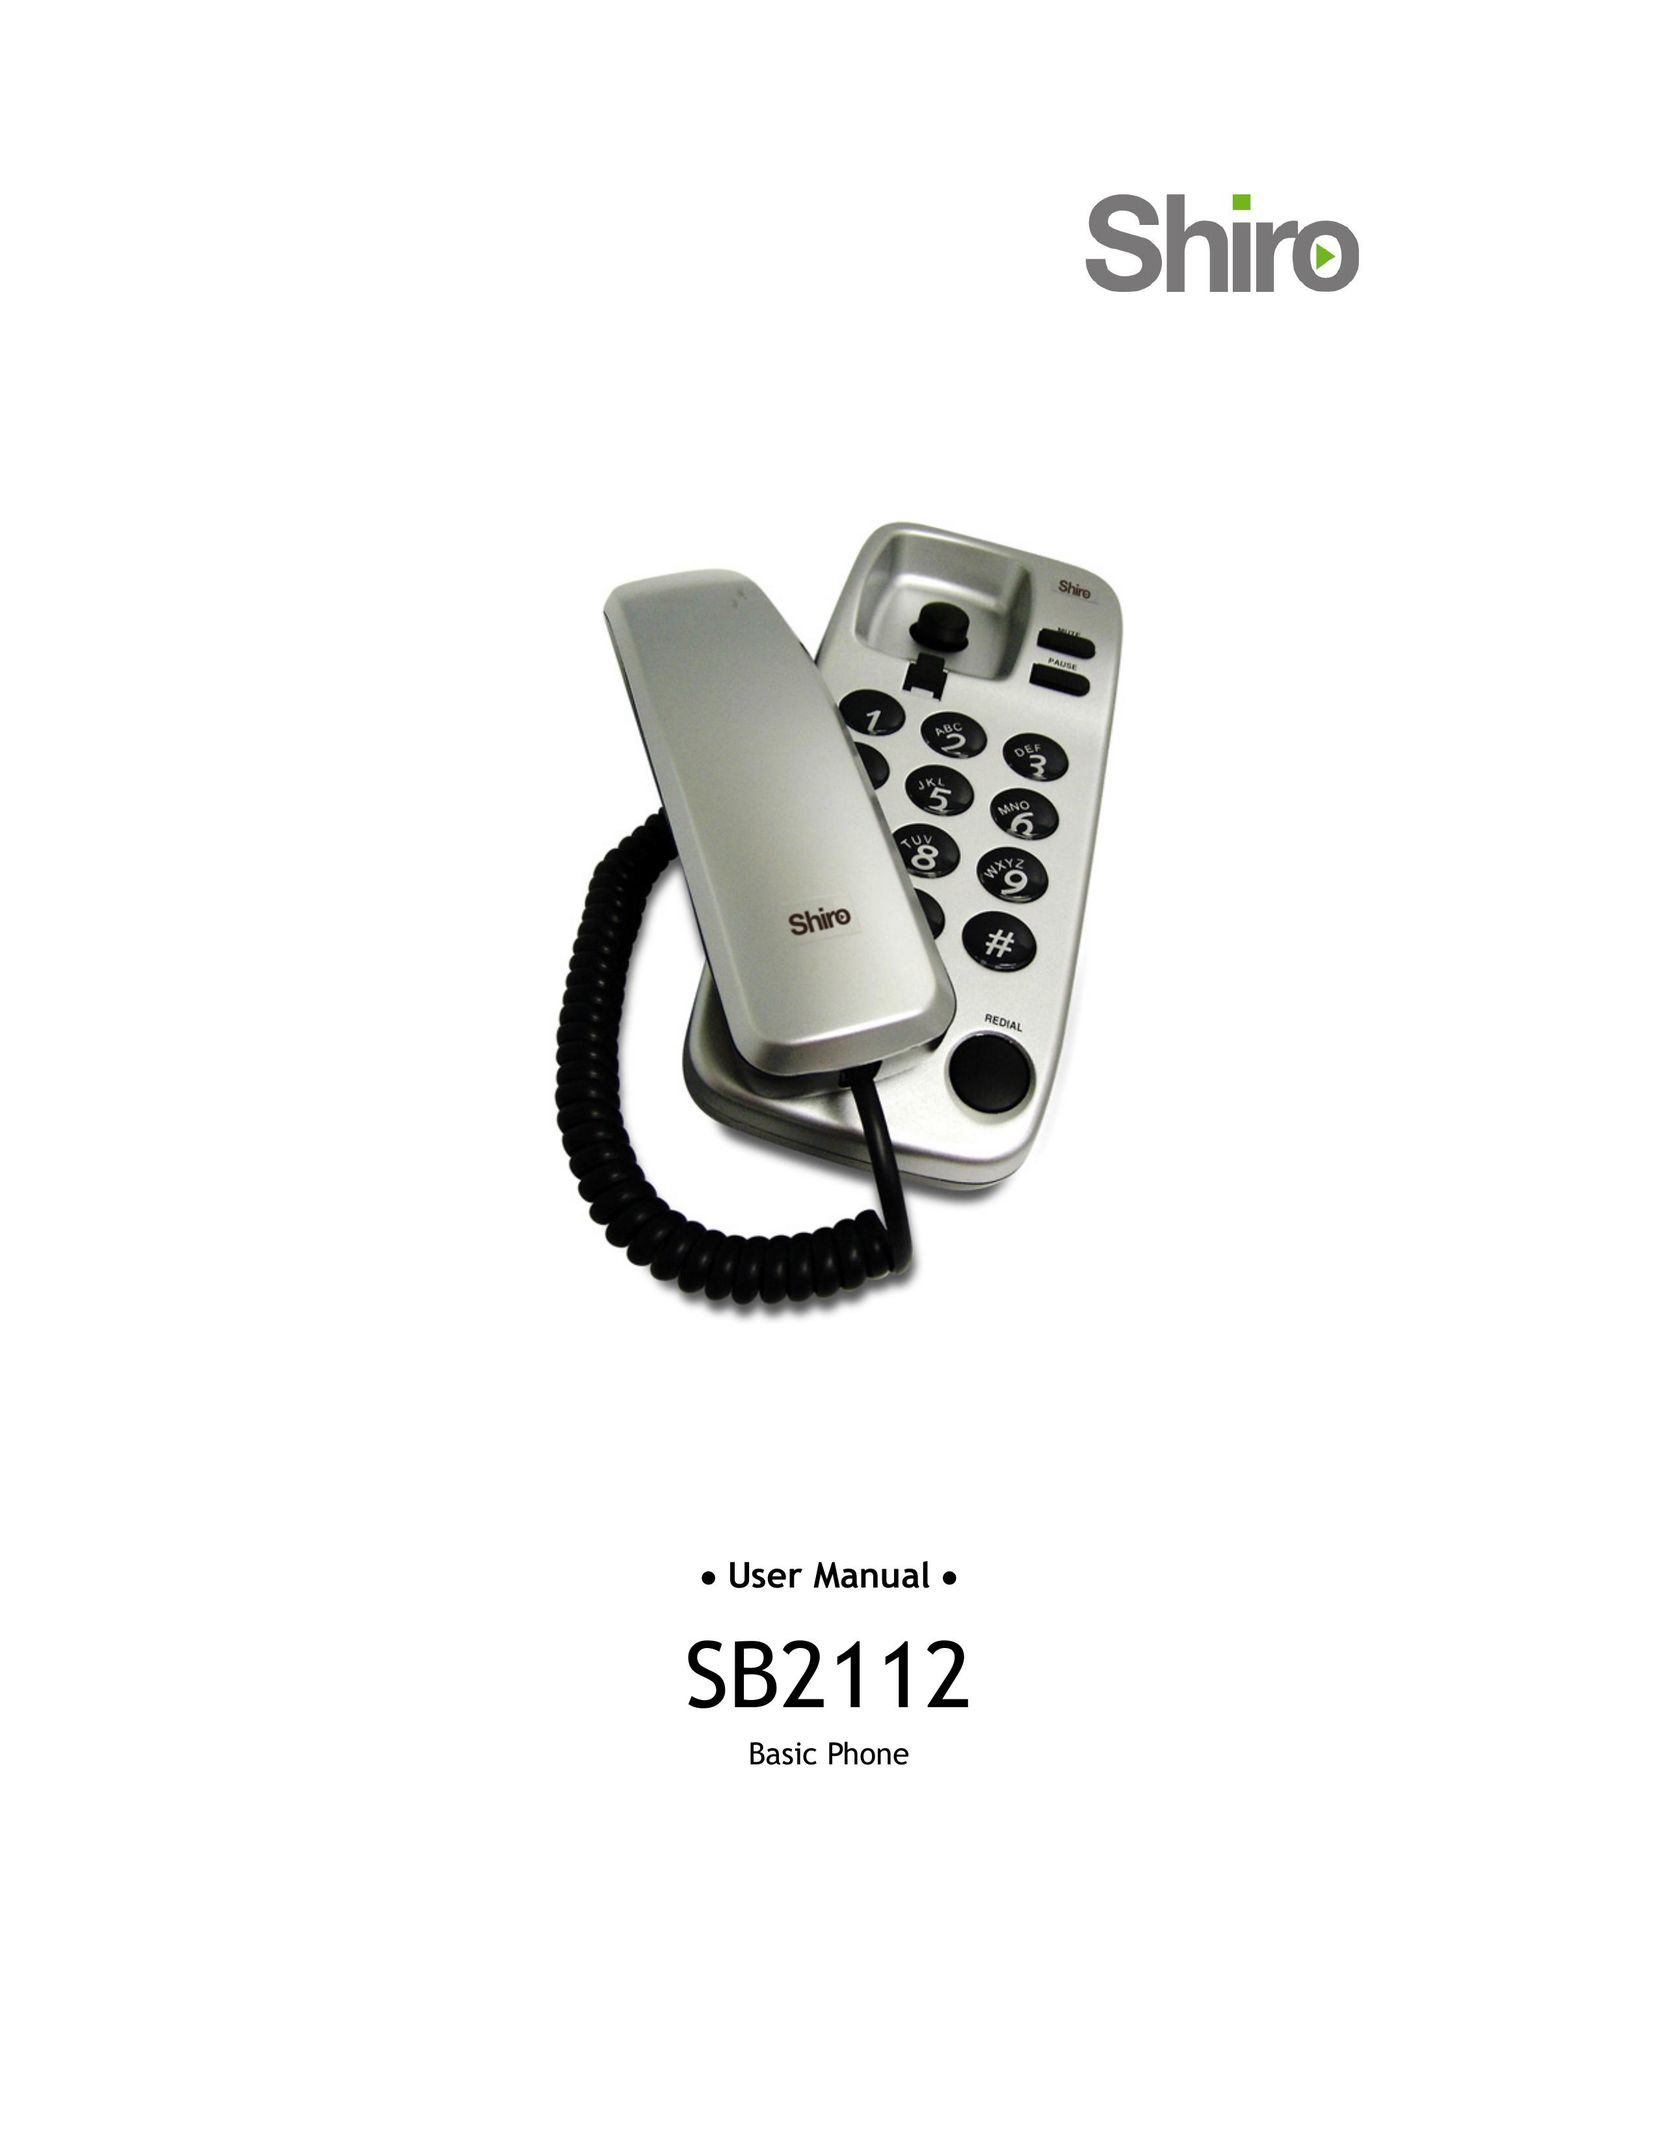 Shiro SB2112 Telephone User Manual